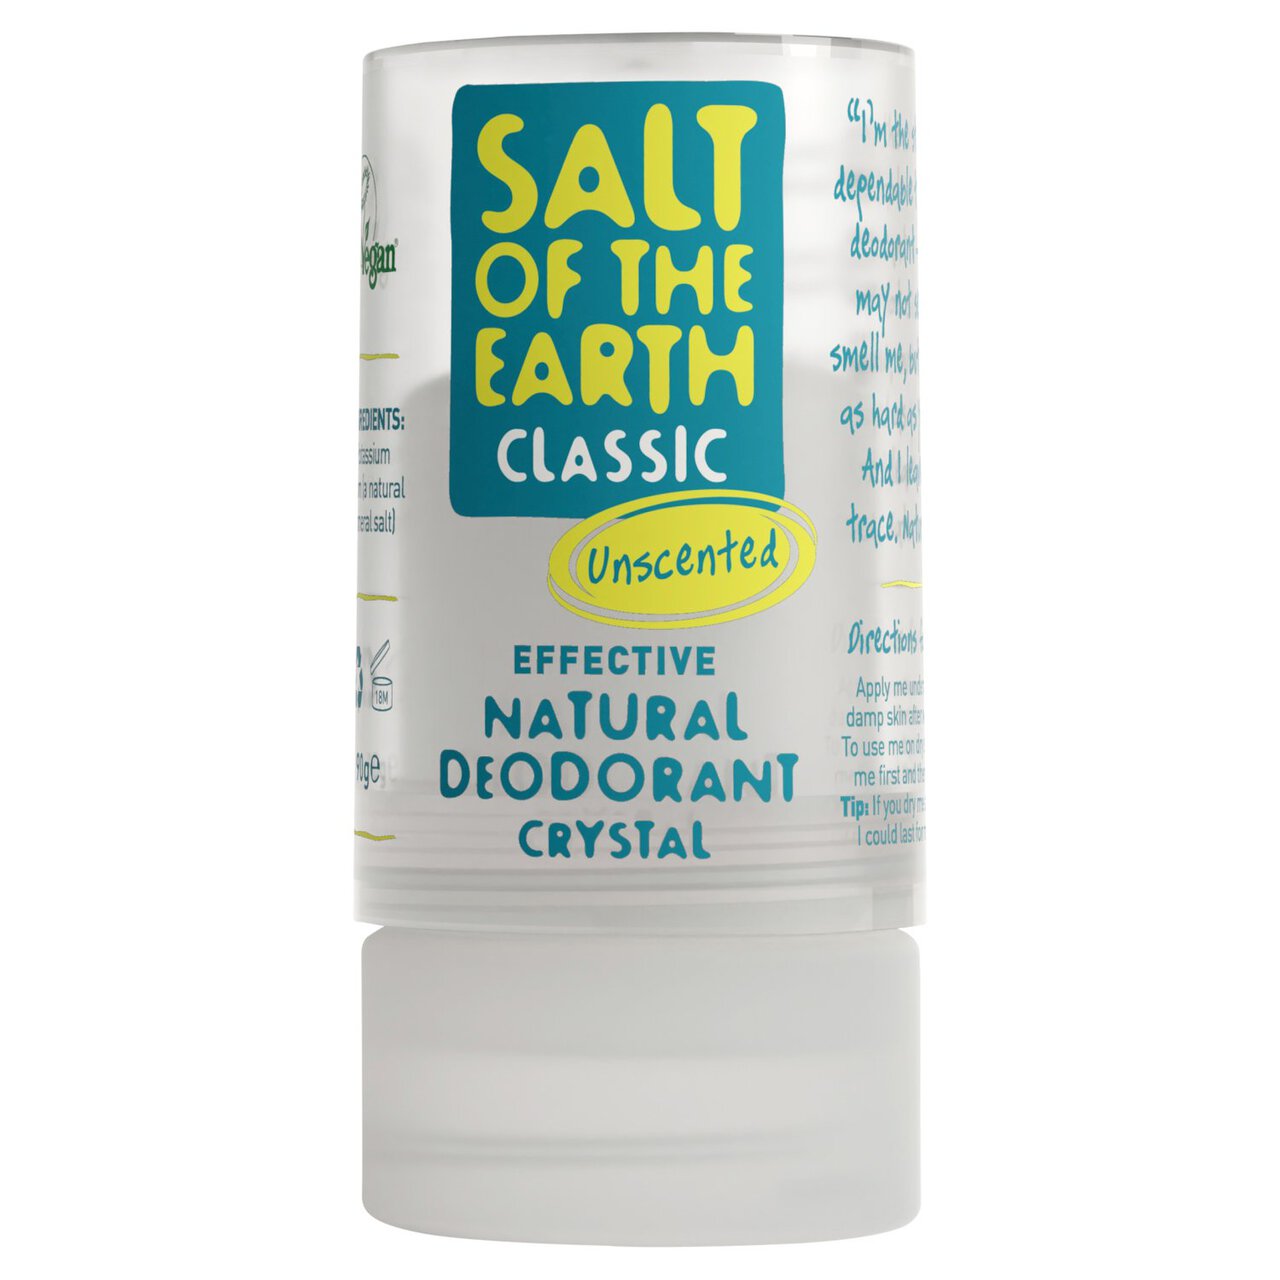 Salt of the Earth Classic Natural Deodorant 90g